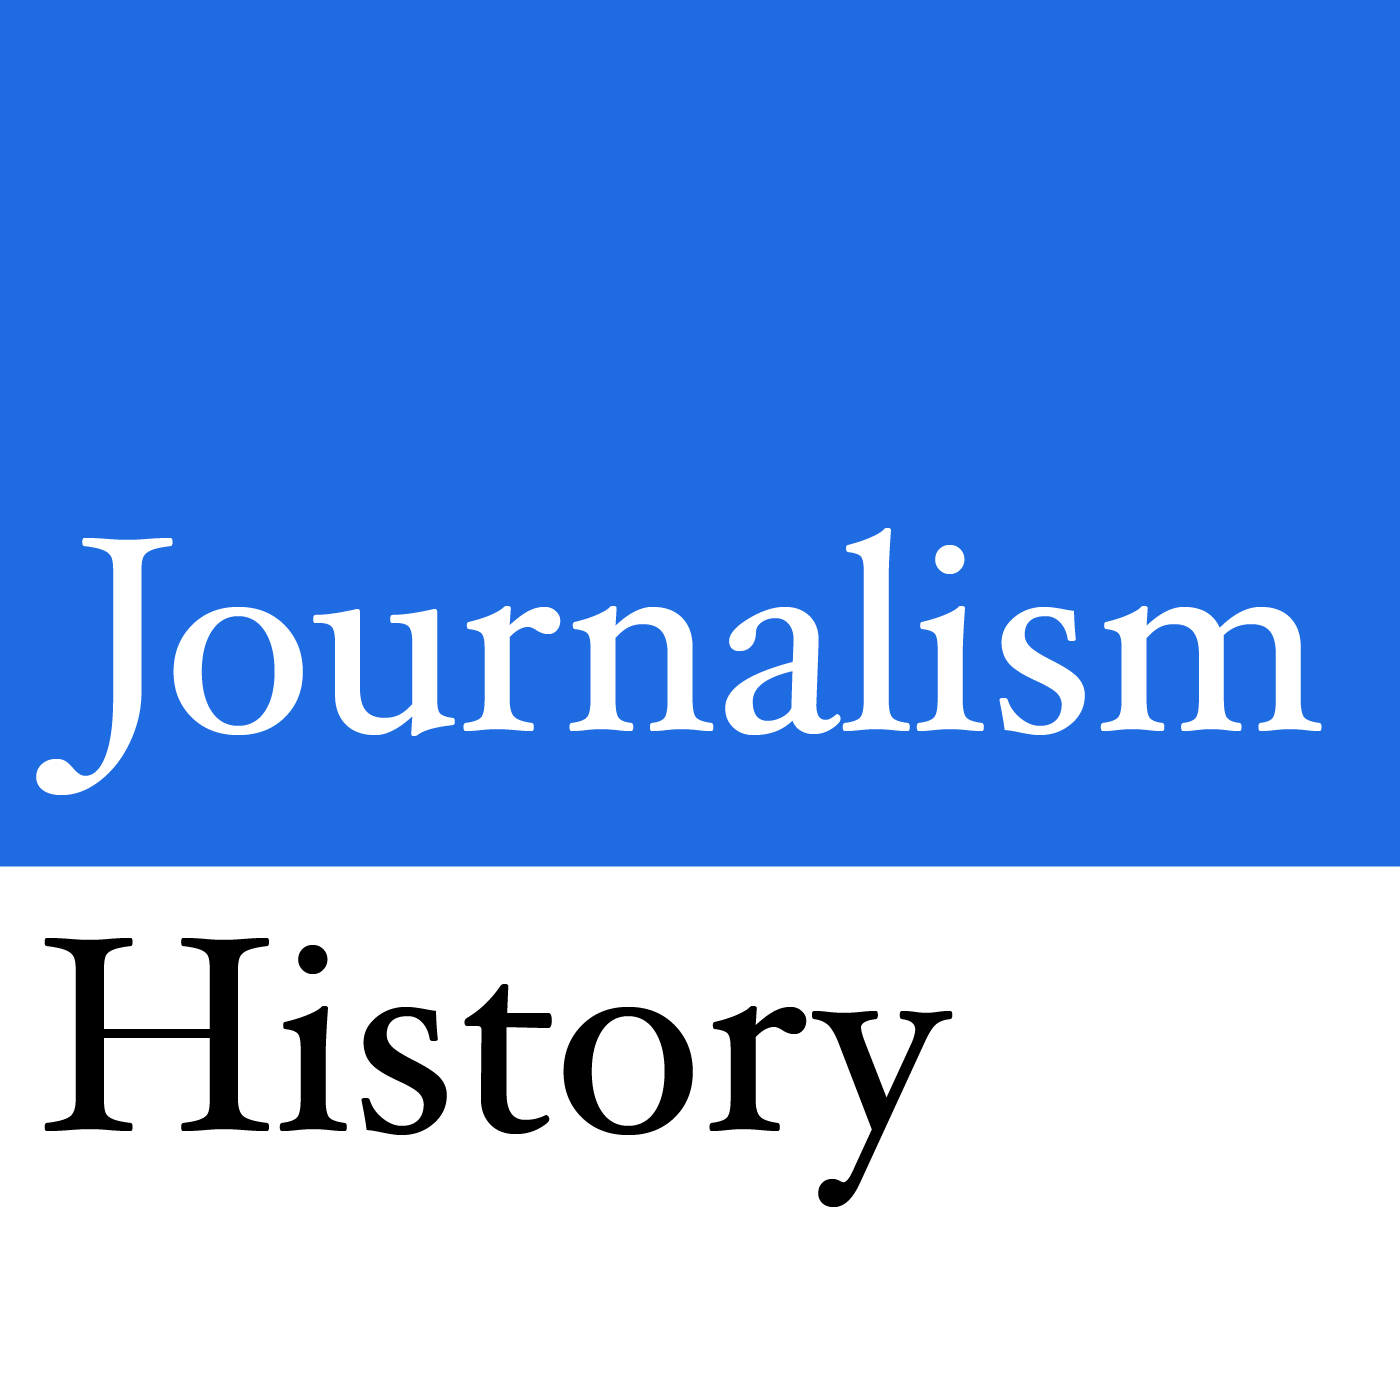 Journalism History